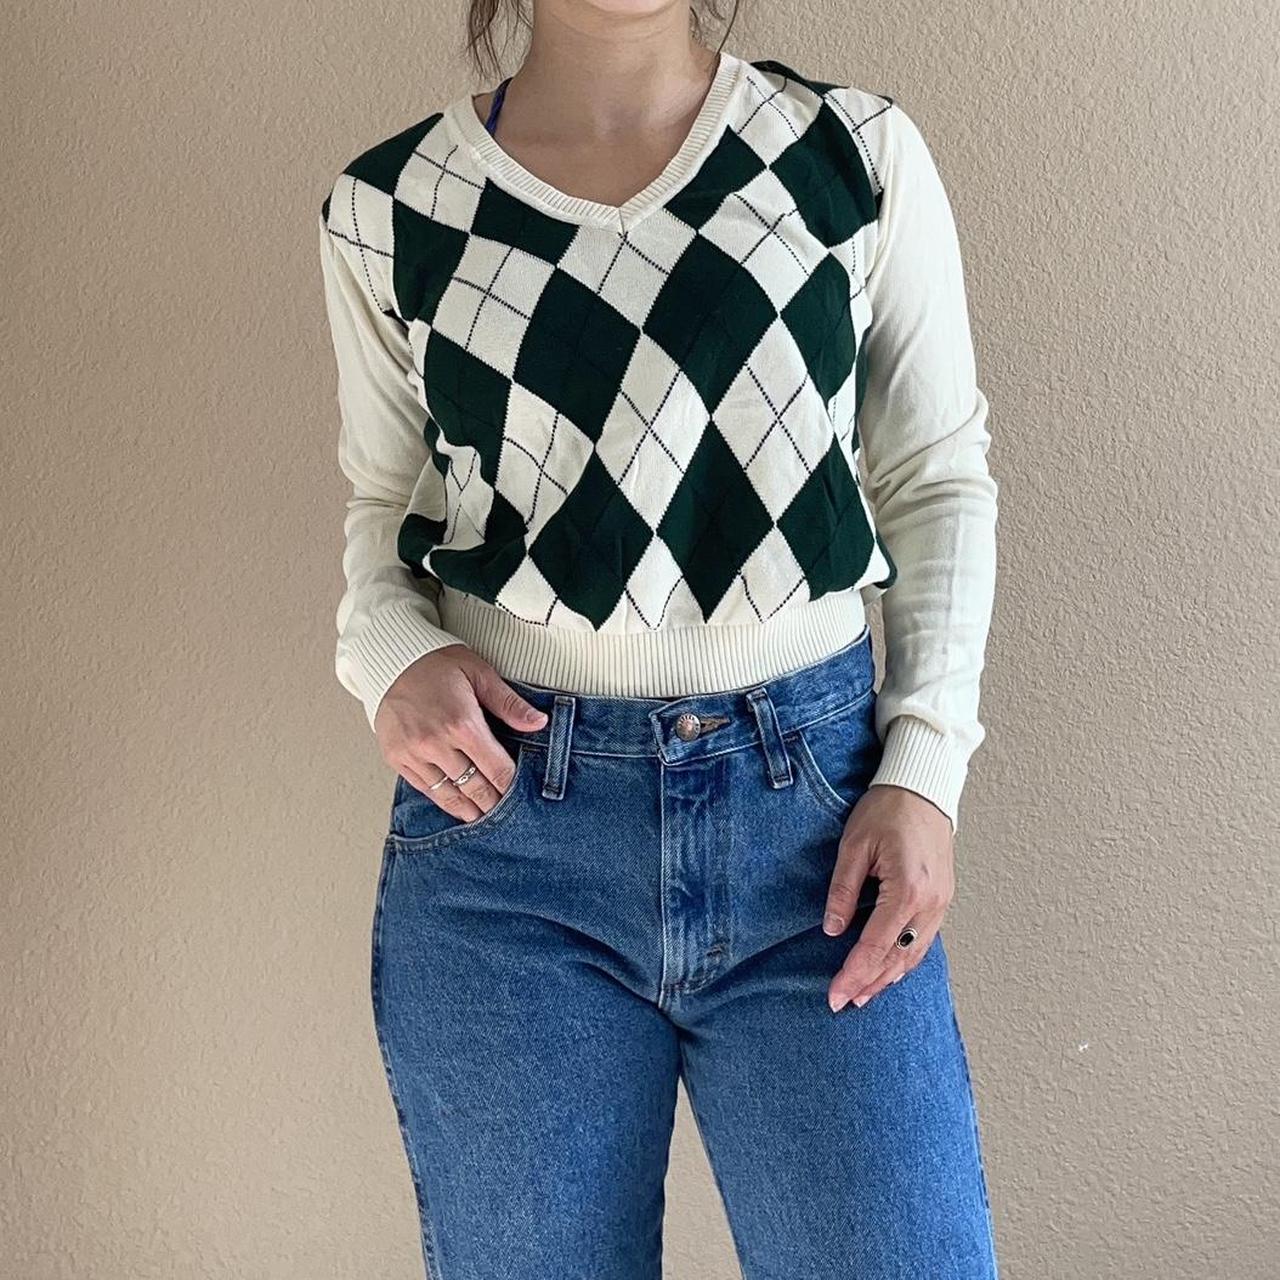 Plaid Brandy Melville Sweater Fits as a womens - Depop